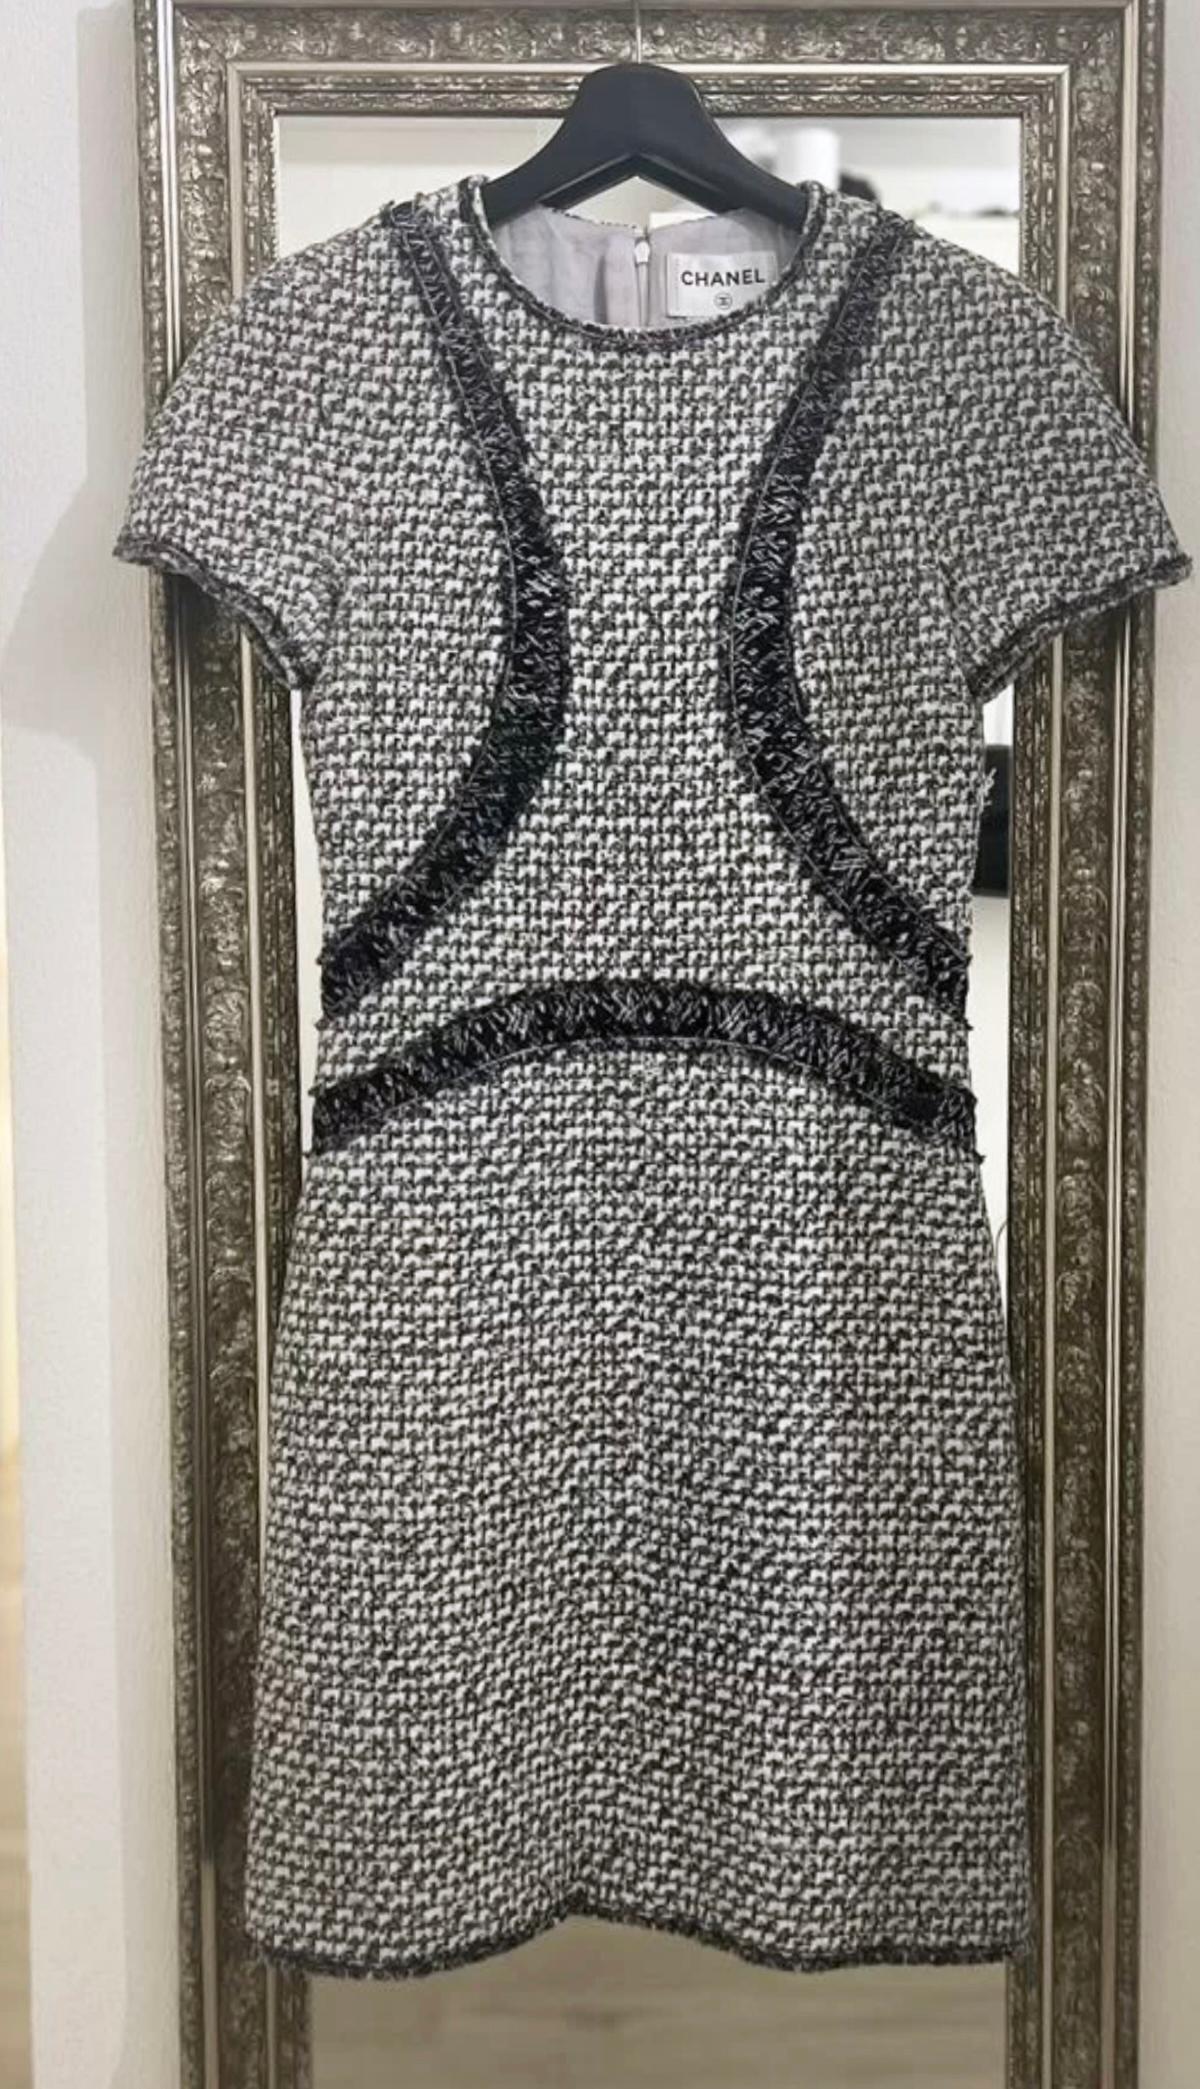 Chanel fantasy tweed dress with geometric inserts.
- tonal silk lining
Size mark 34 FR. Pristine condition.